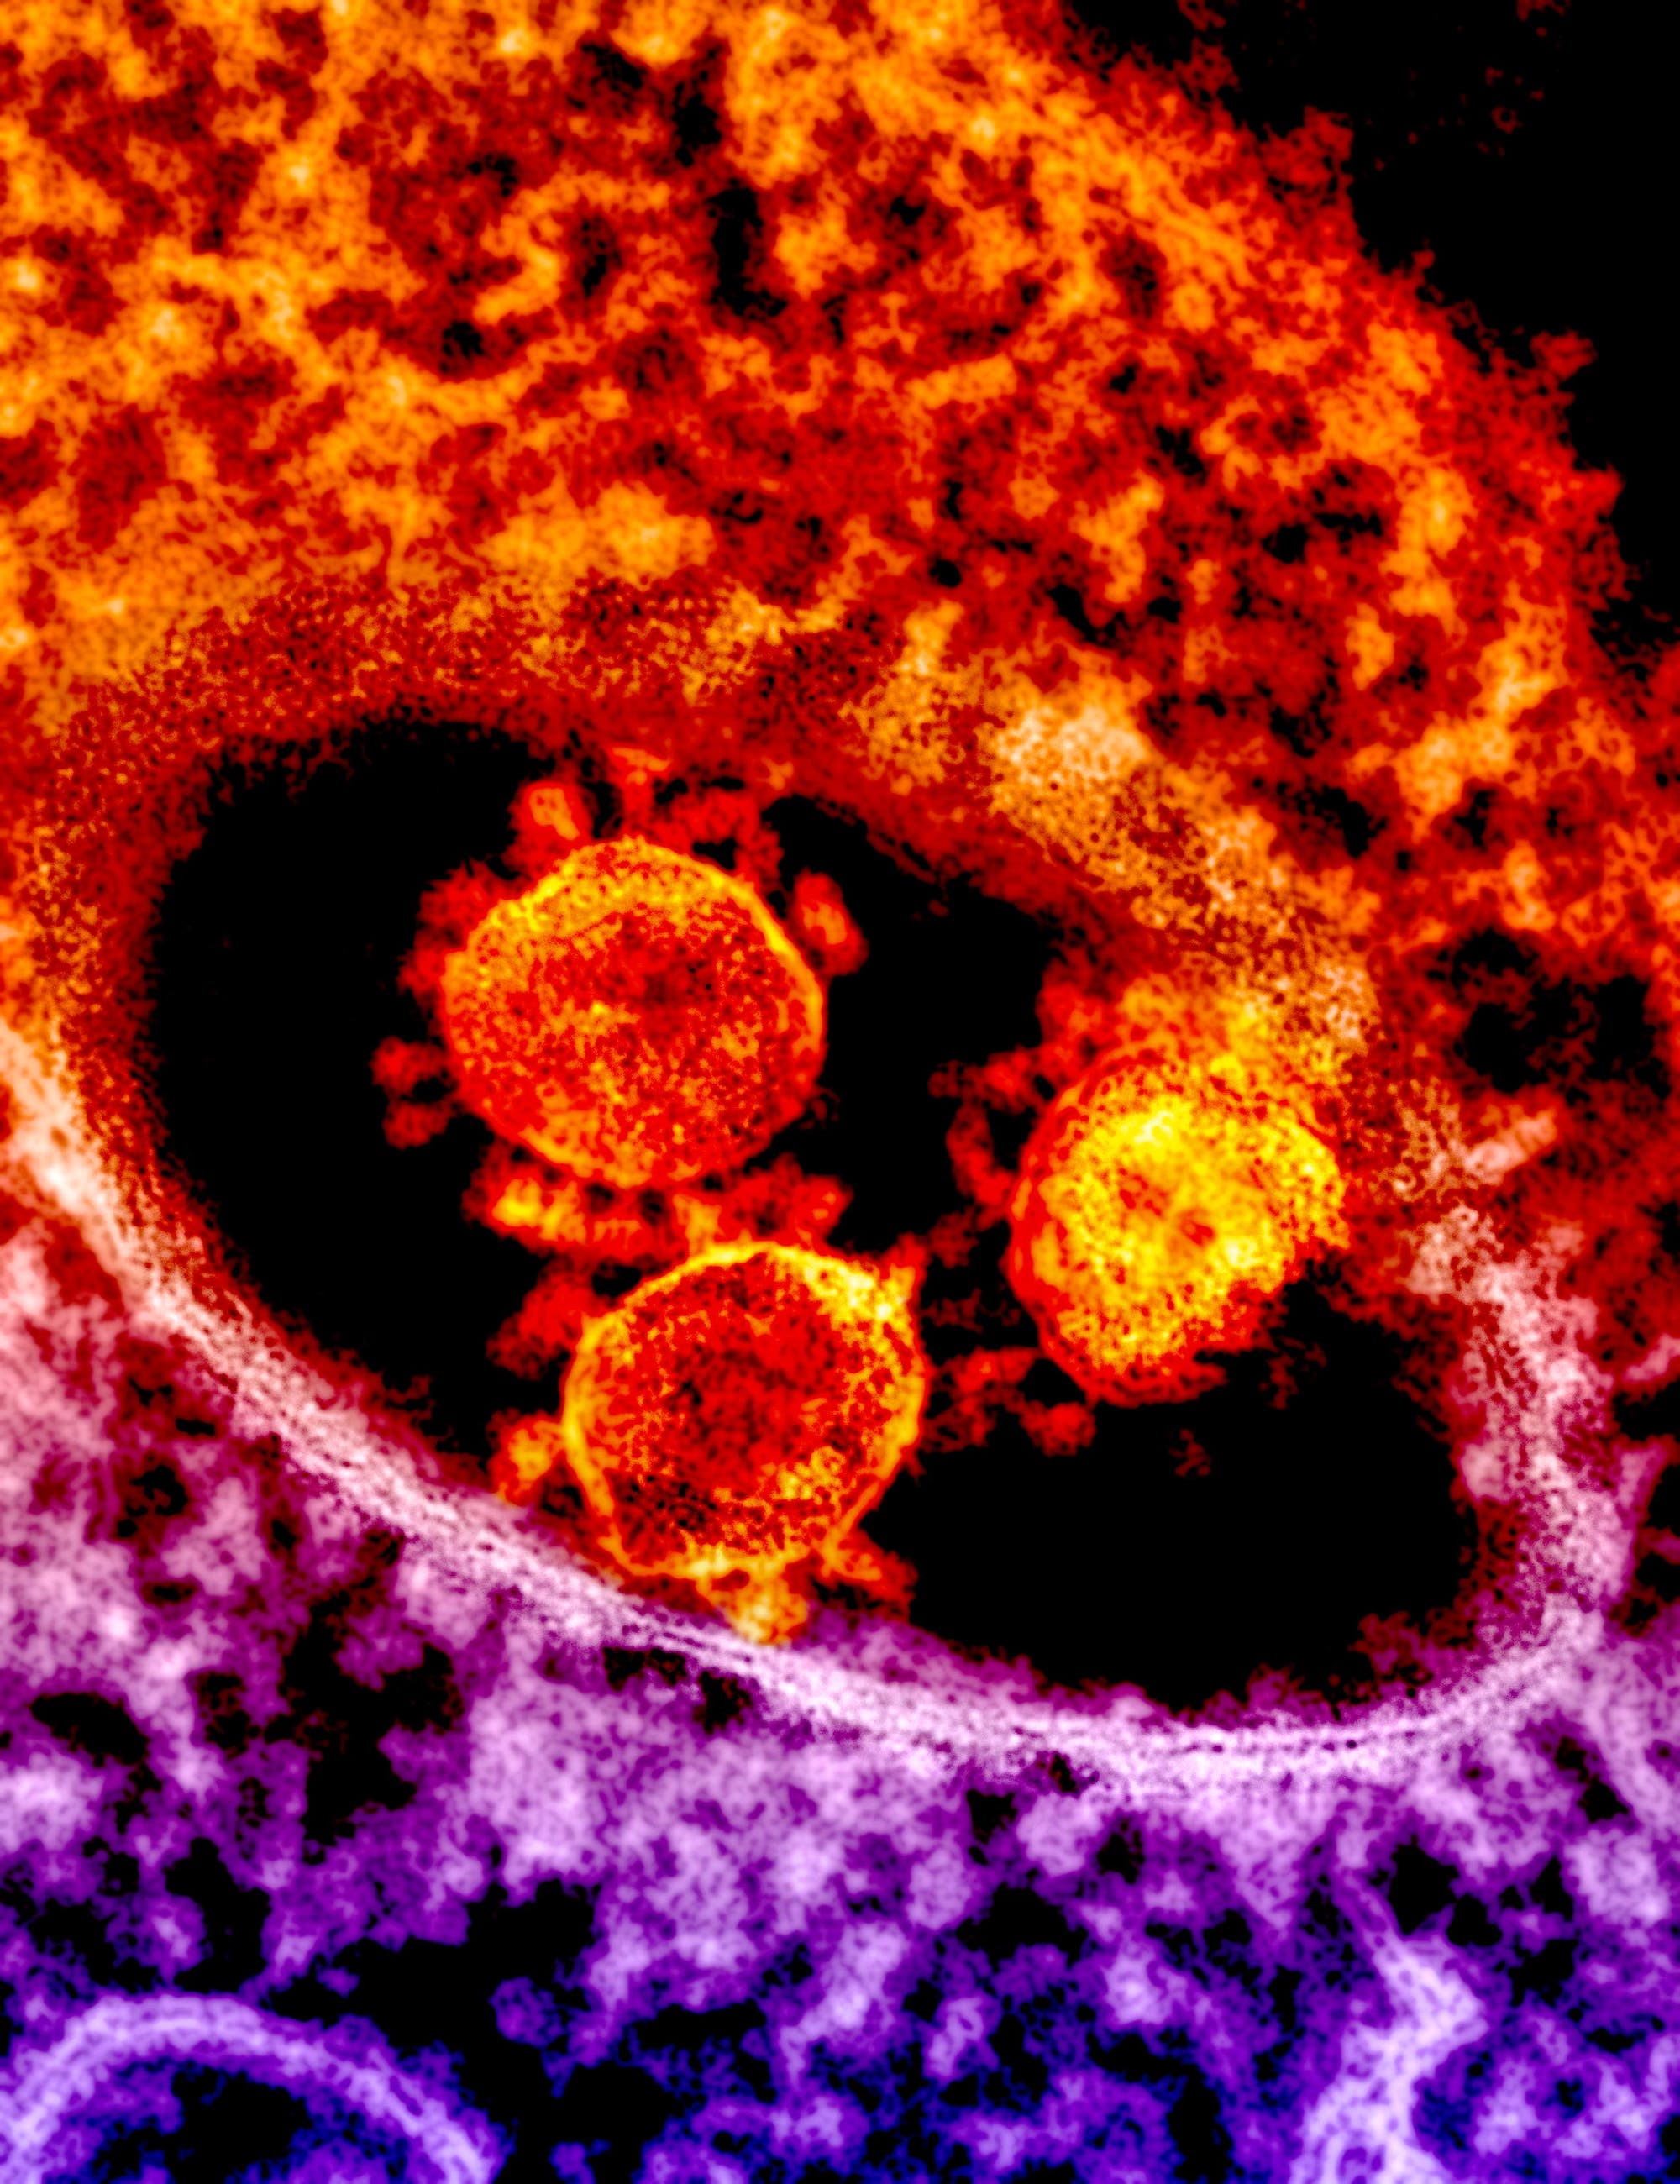 Coronavirus unter dem Elektronenmikroskop